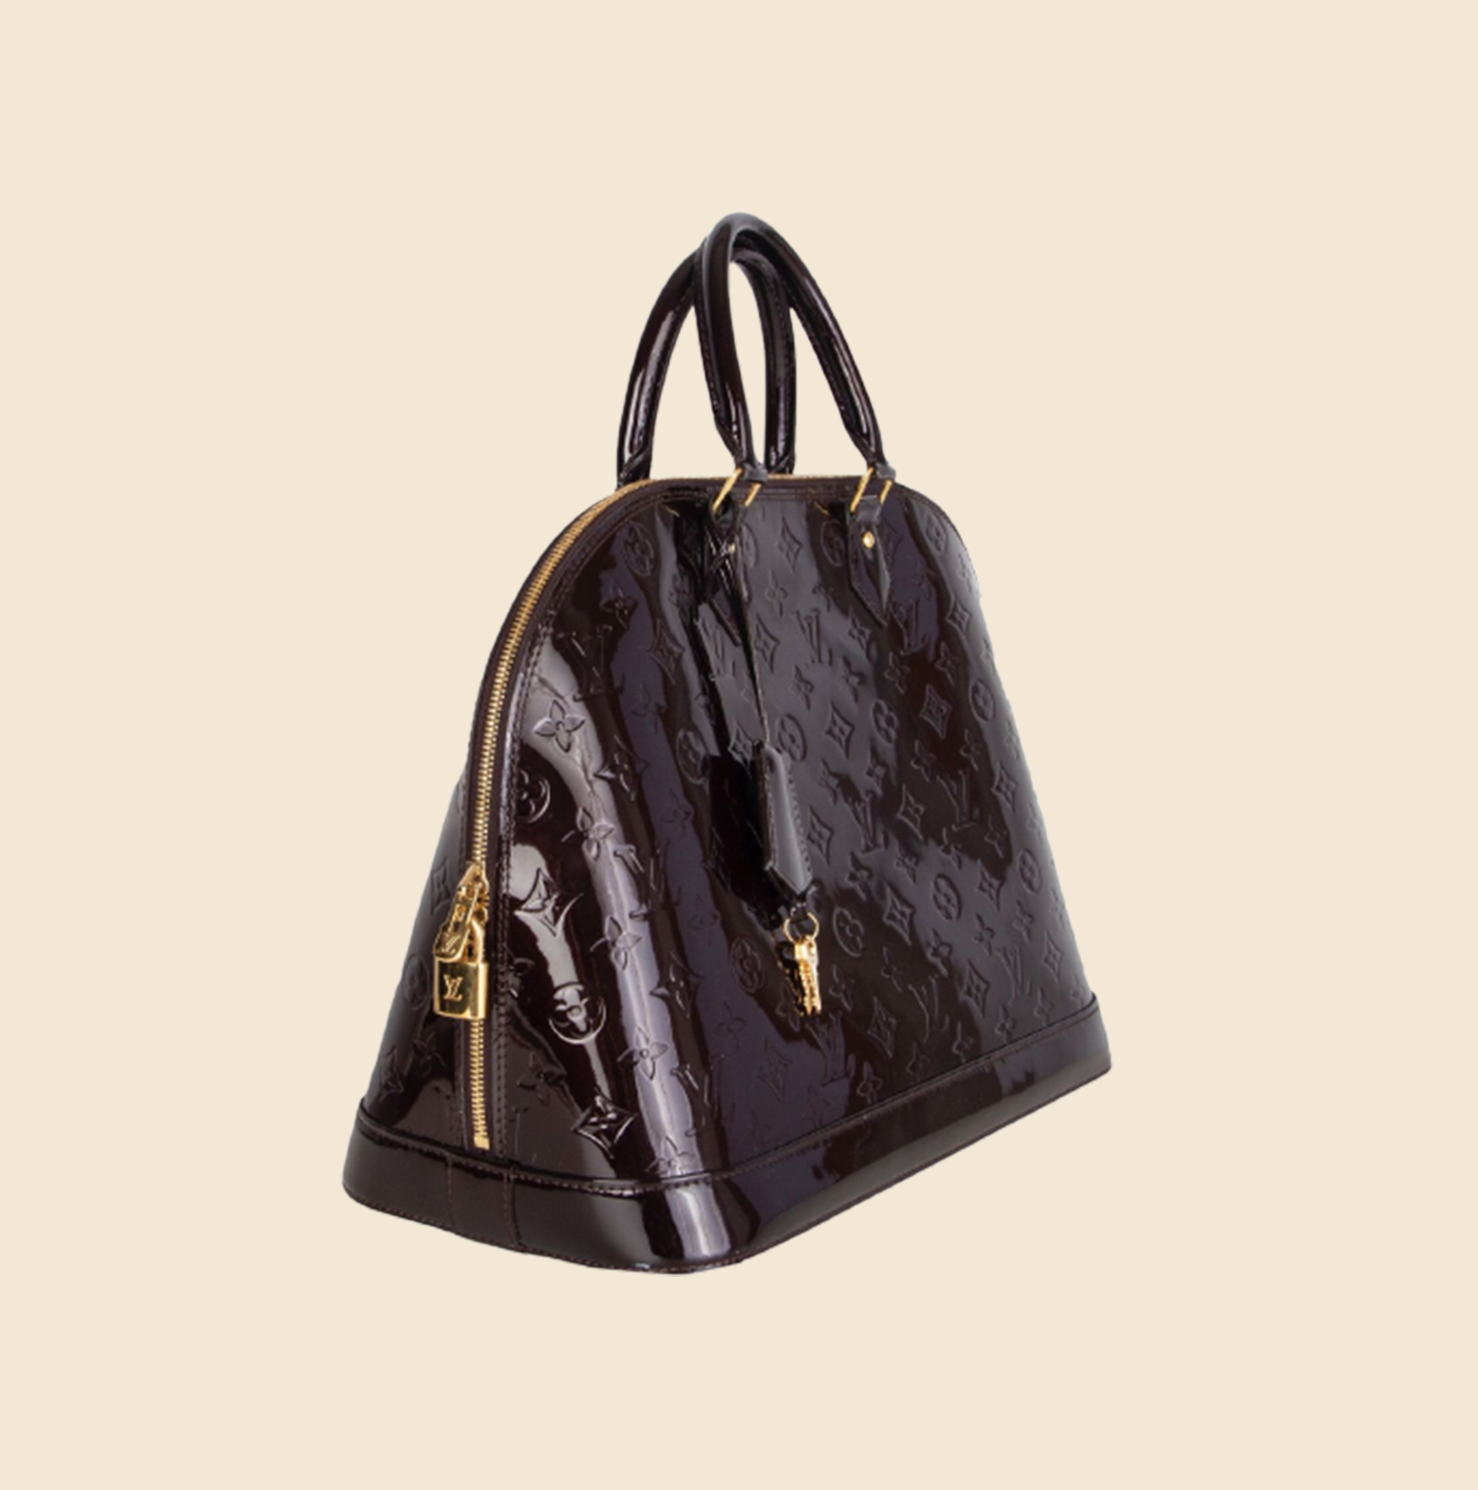 Louis Vuitton Alma PM Amarante Vernis Patent Leather Bag.